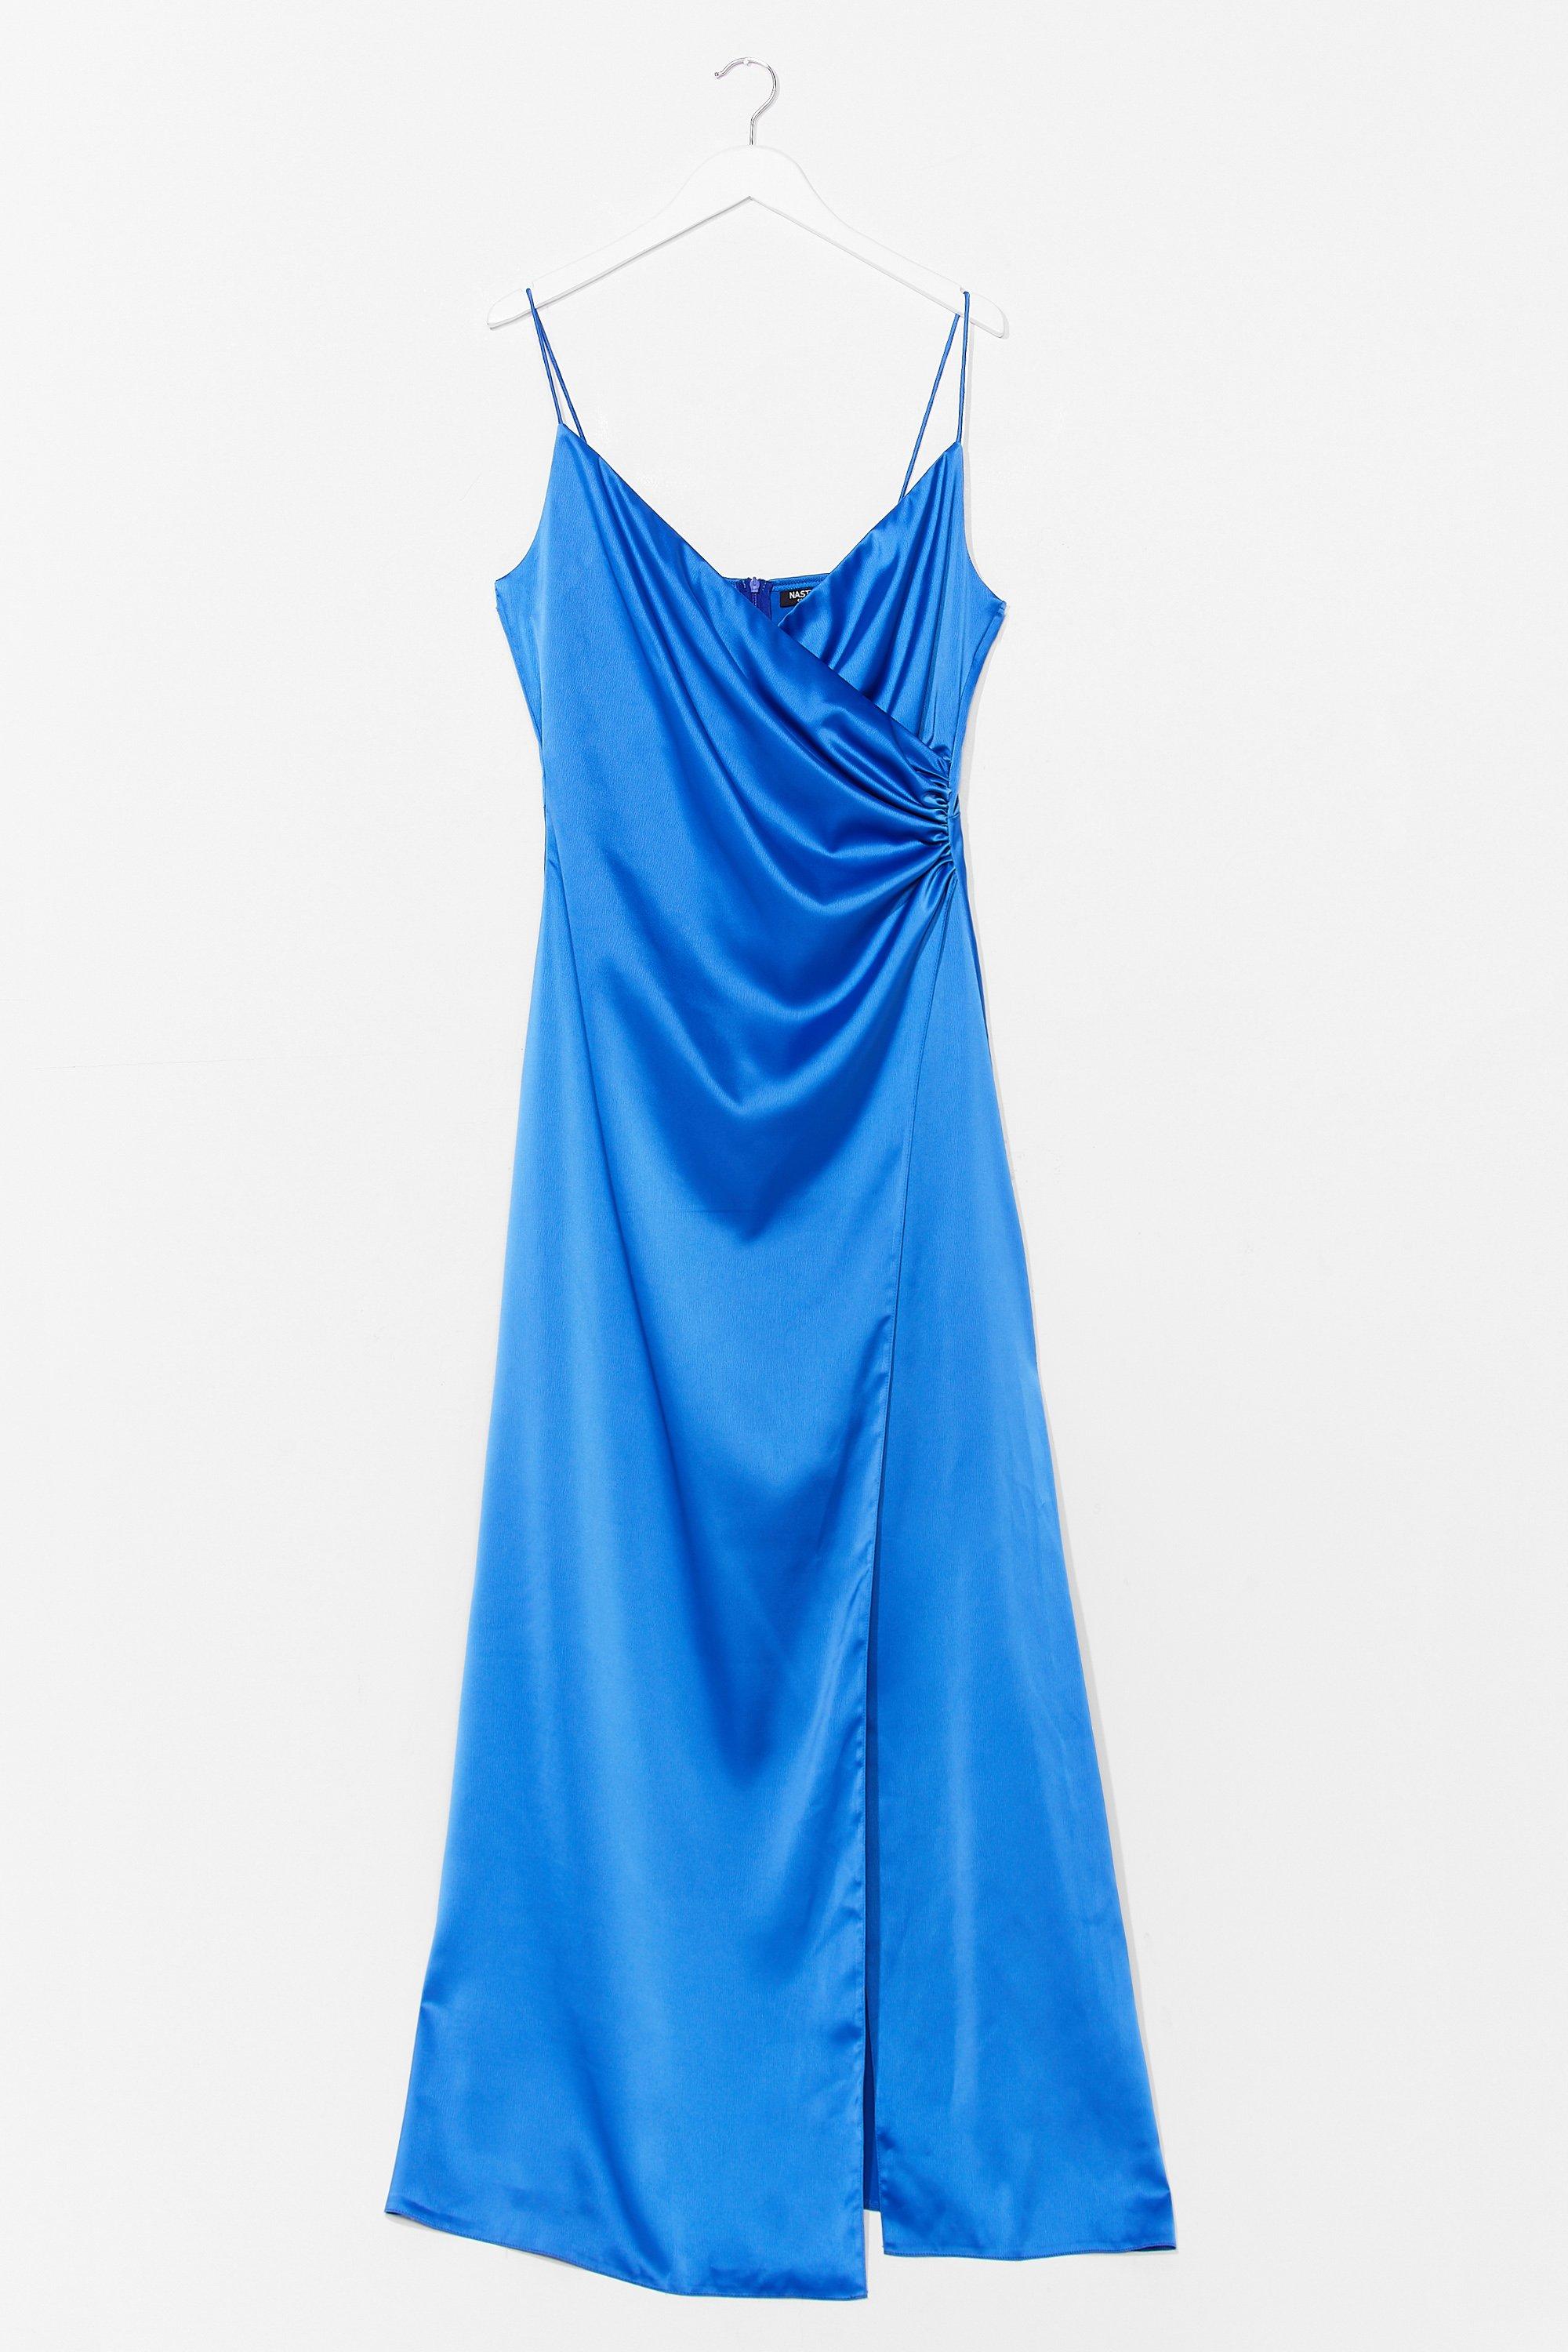 nasty gal blue maxi dress